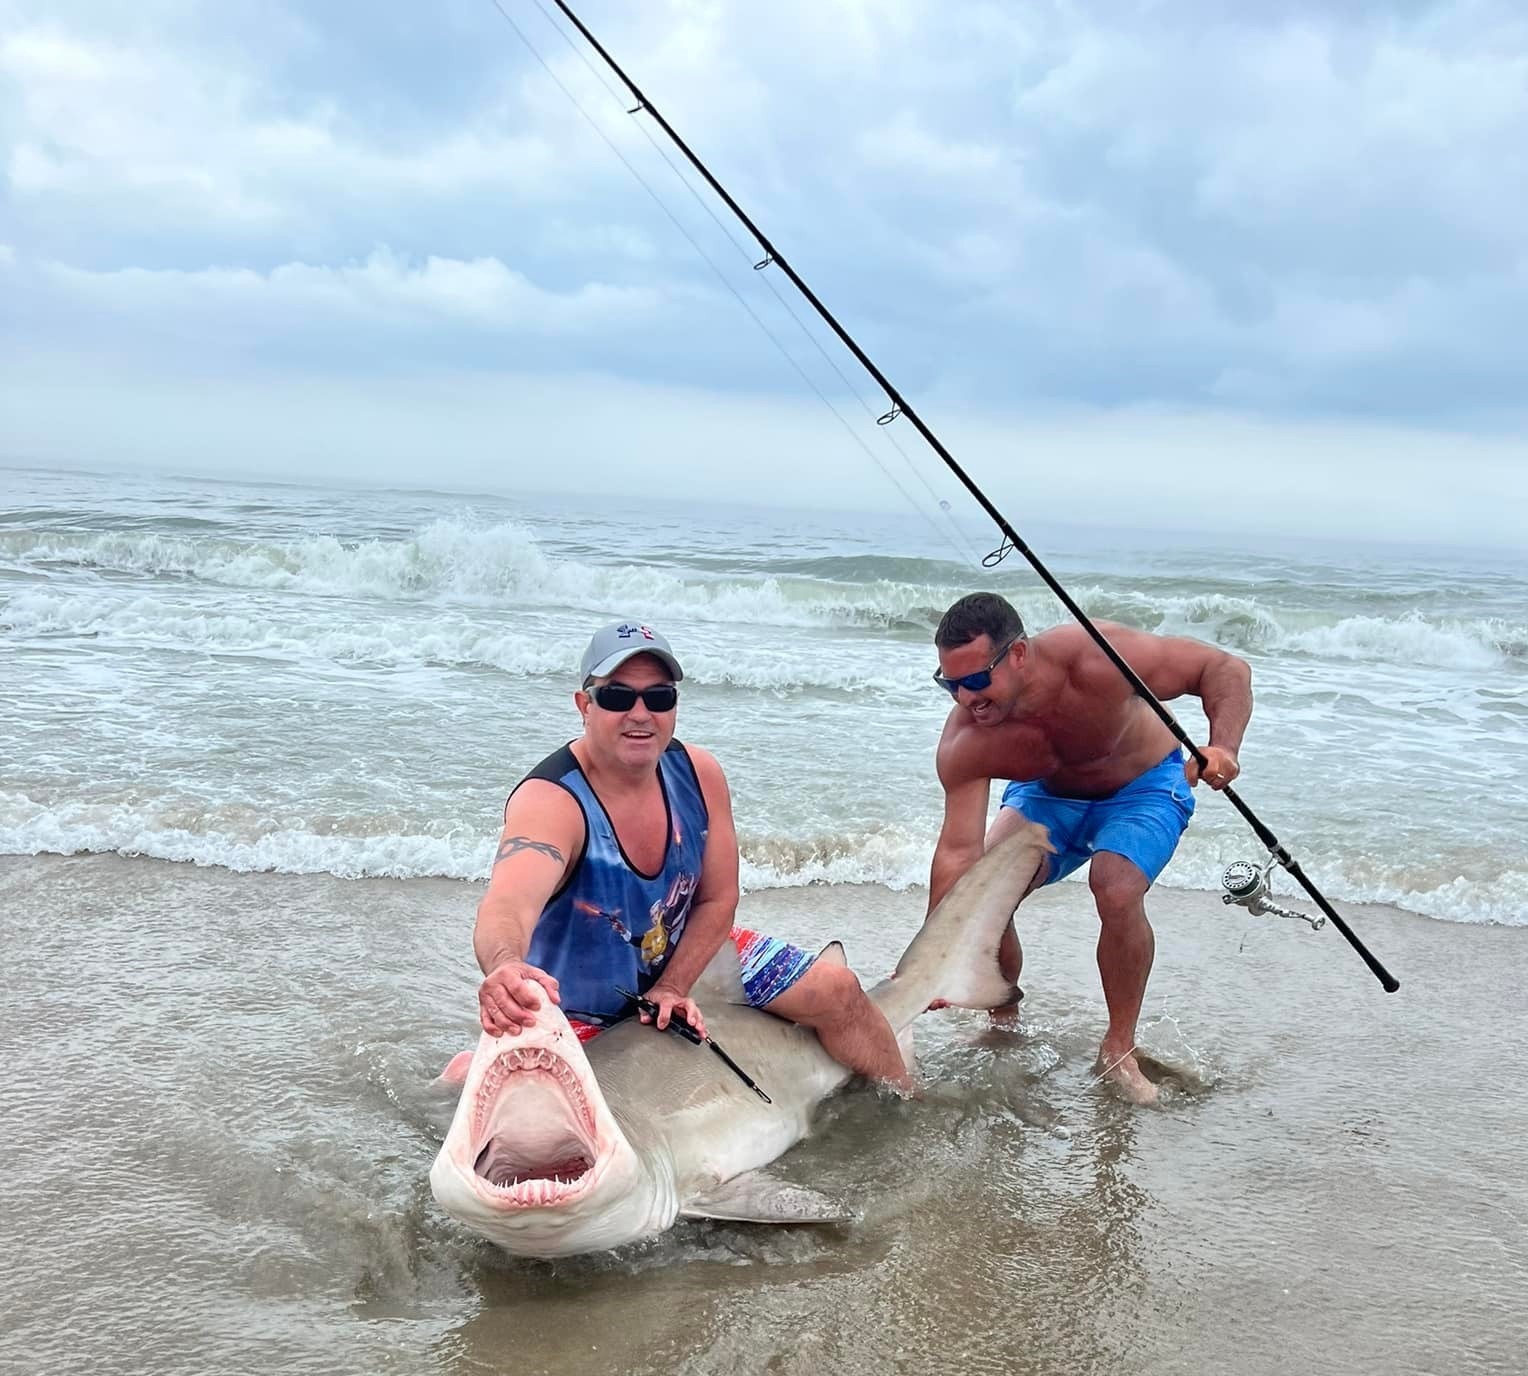 https://seaislenews.com/wp-content/uploads/sites/3/2022/07/1.4-Shark-caught-by-fishermen.jpg